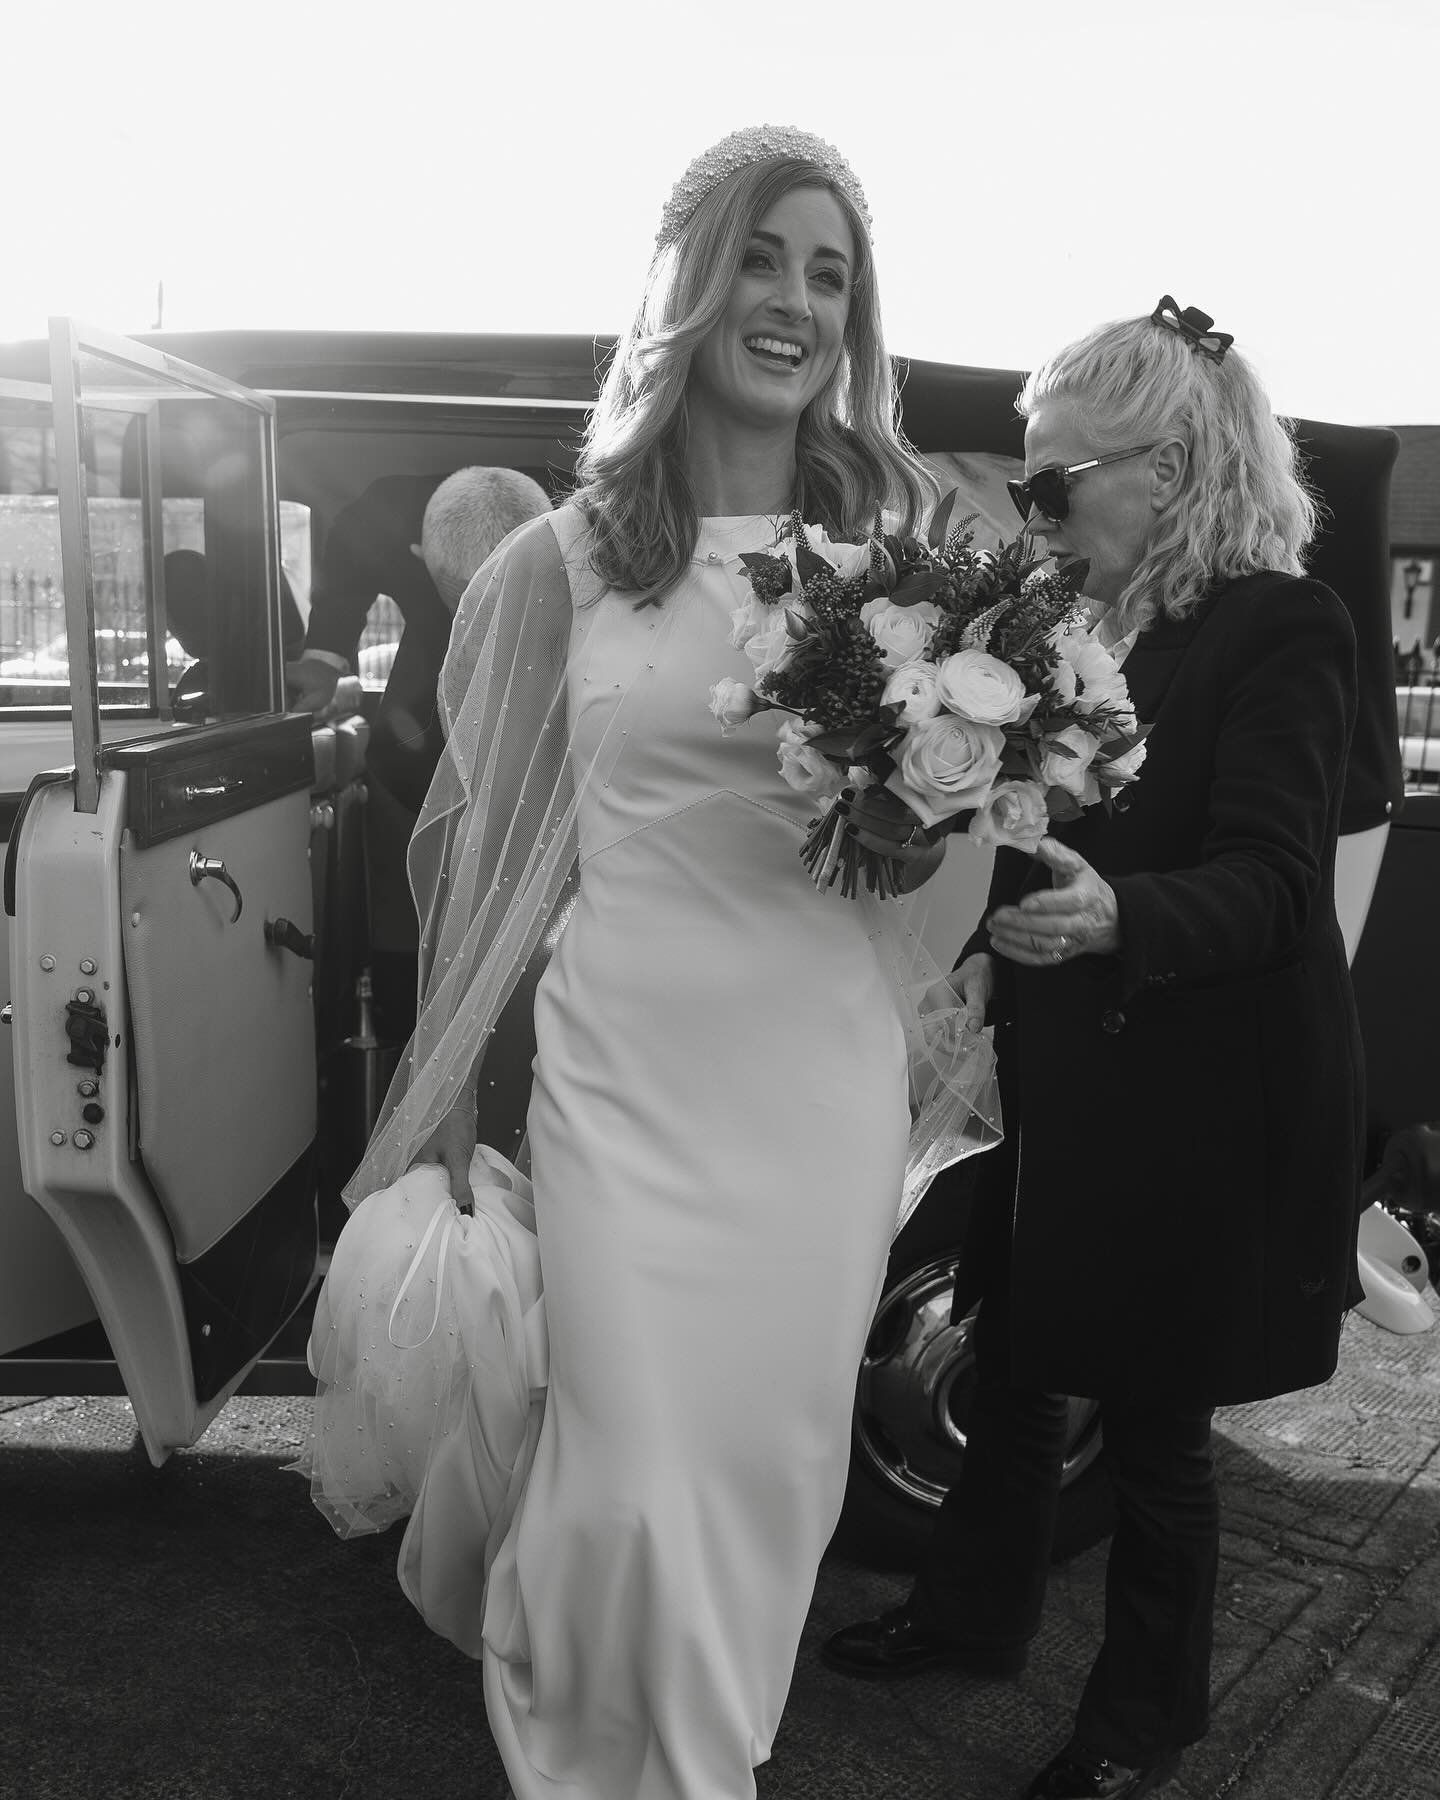 Jennifer stepping out of the wedding car on her way to get married! 
@kilshanehouse 

#banshachurch #kilshanehouse #irishweddingphotographer #documentaryphotographer #documentarywedding